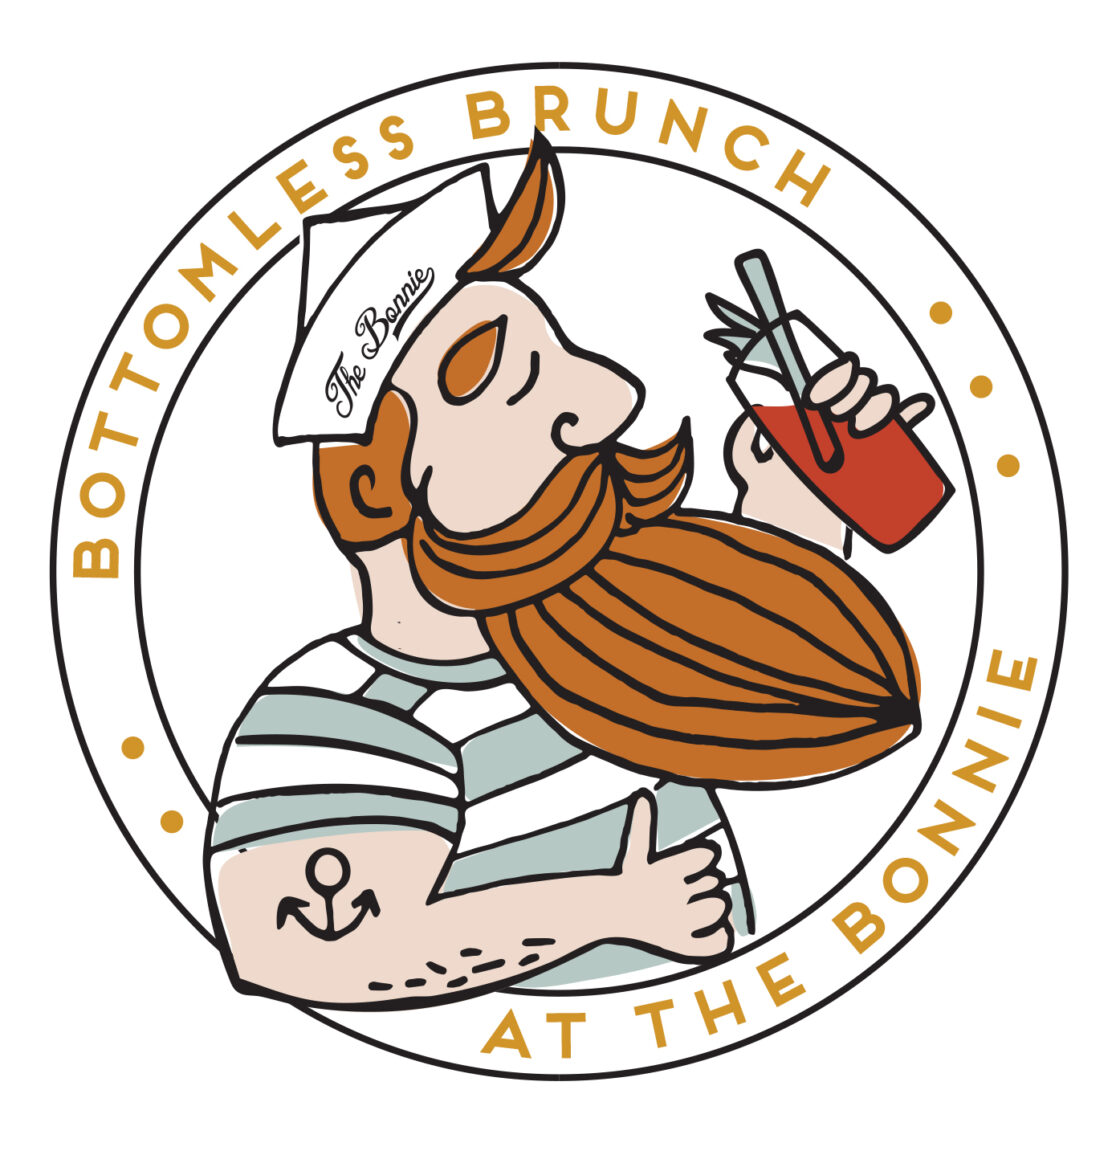 Bottomless Brunch sailor illustration